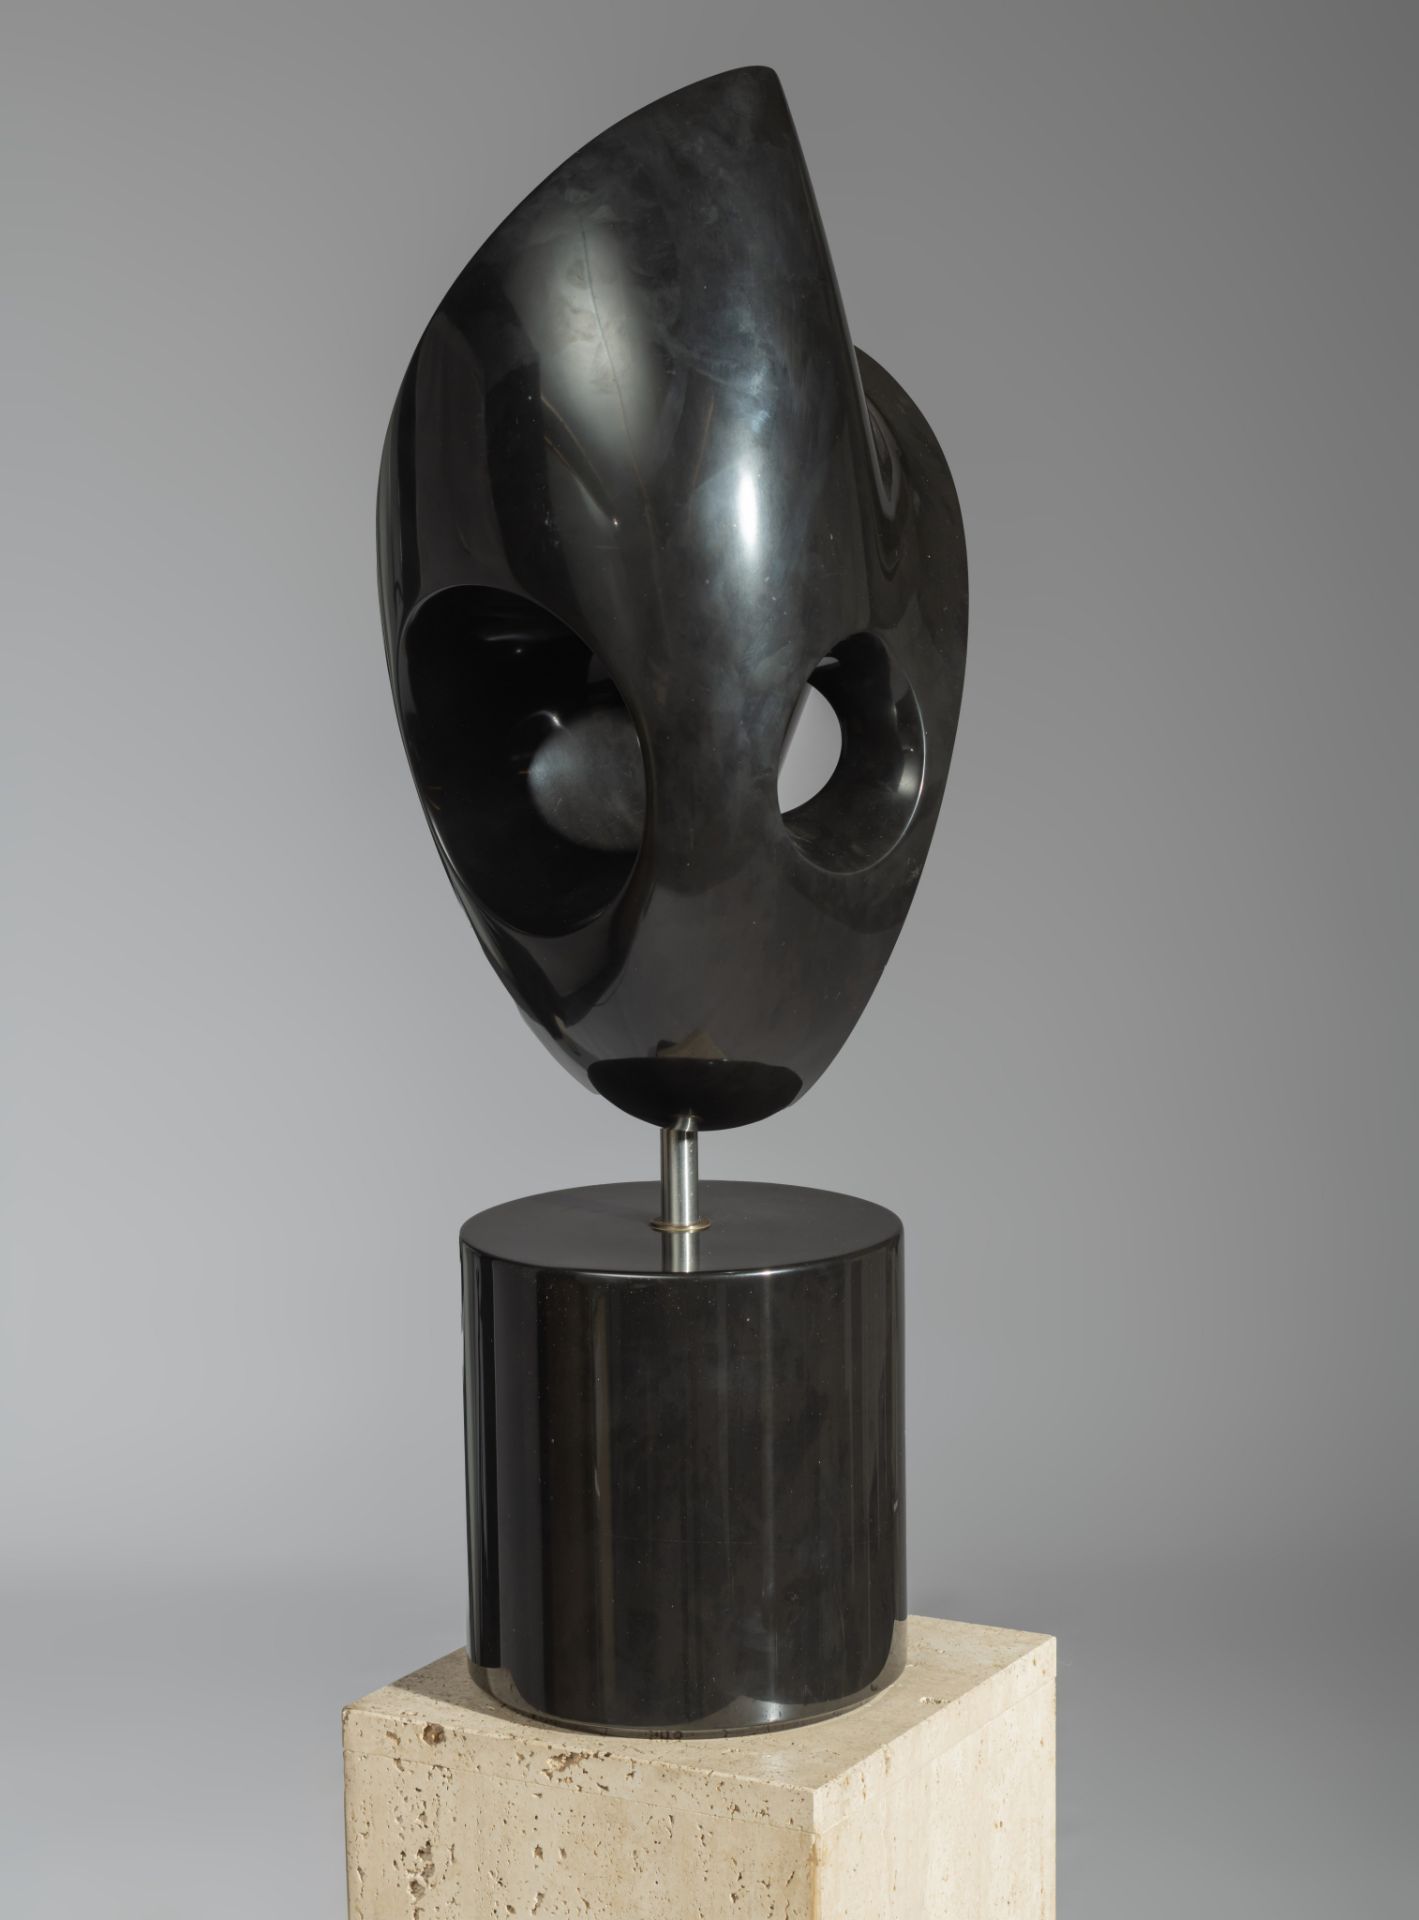 Jeanine Behaeghel (1940-1993), abstract sculpture, 1988, noir Belge marble on a travertine pedestal, - Image 4 of 18